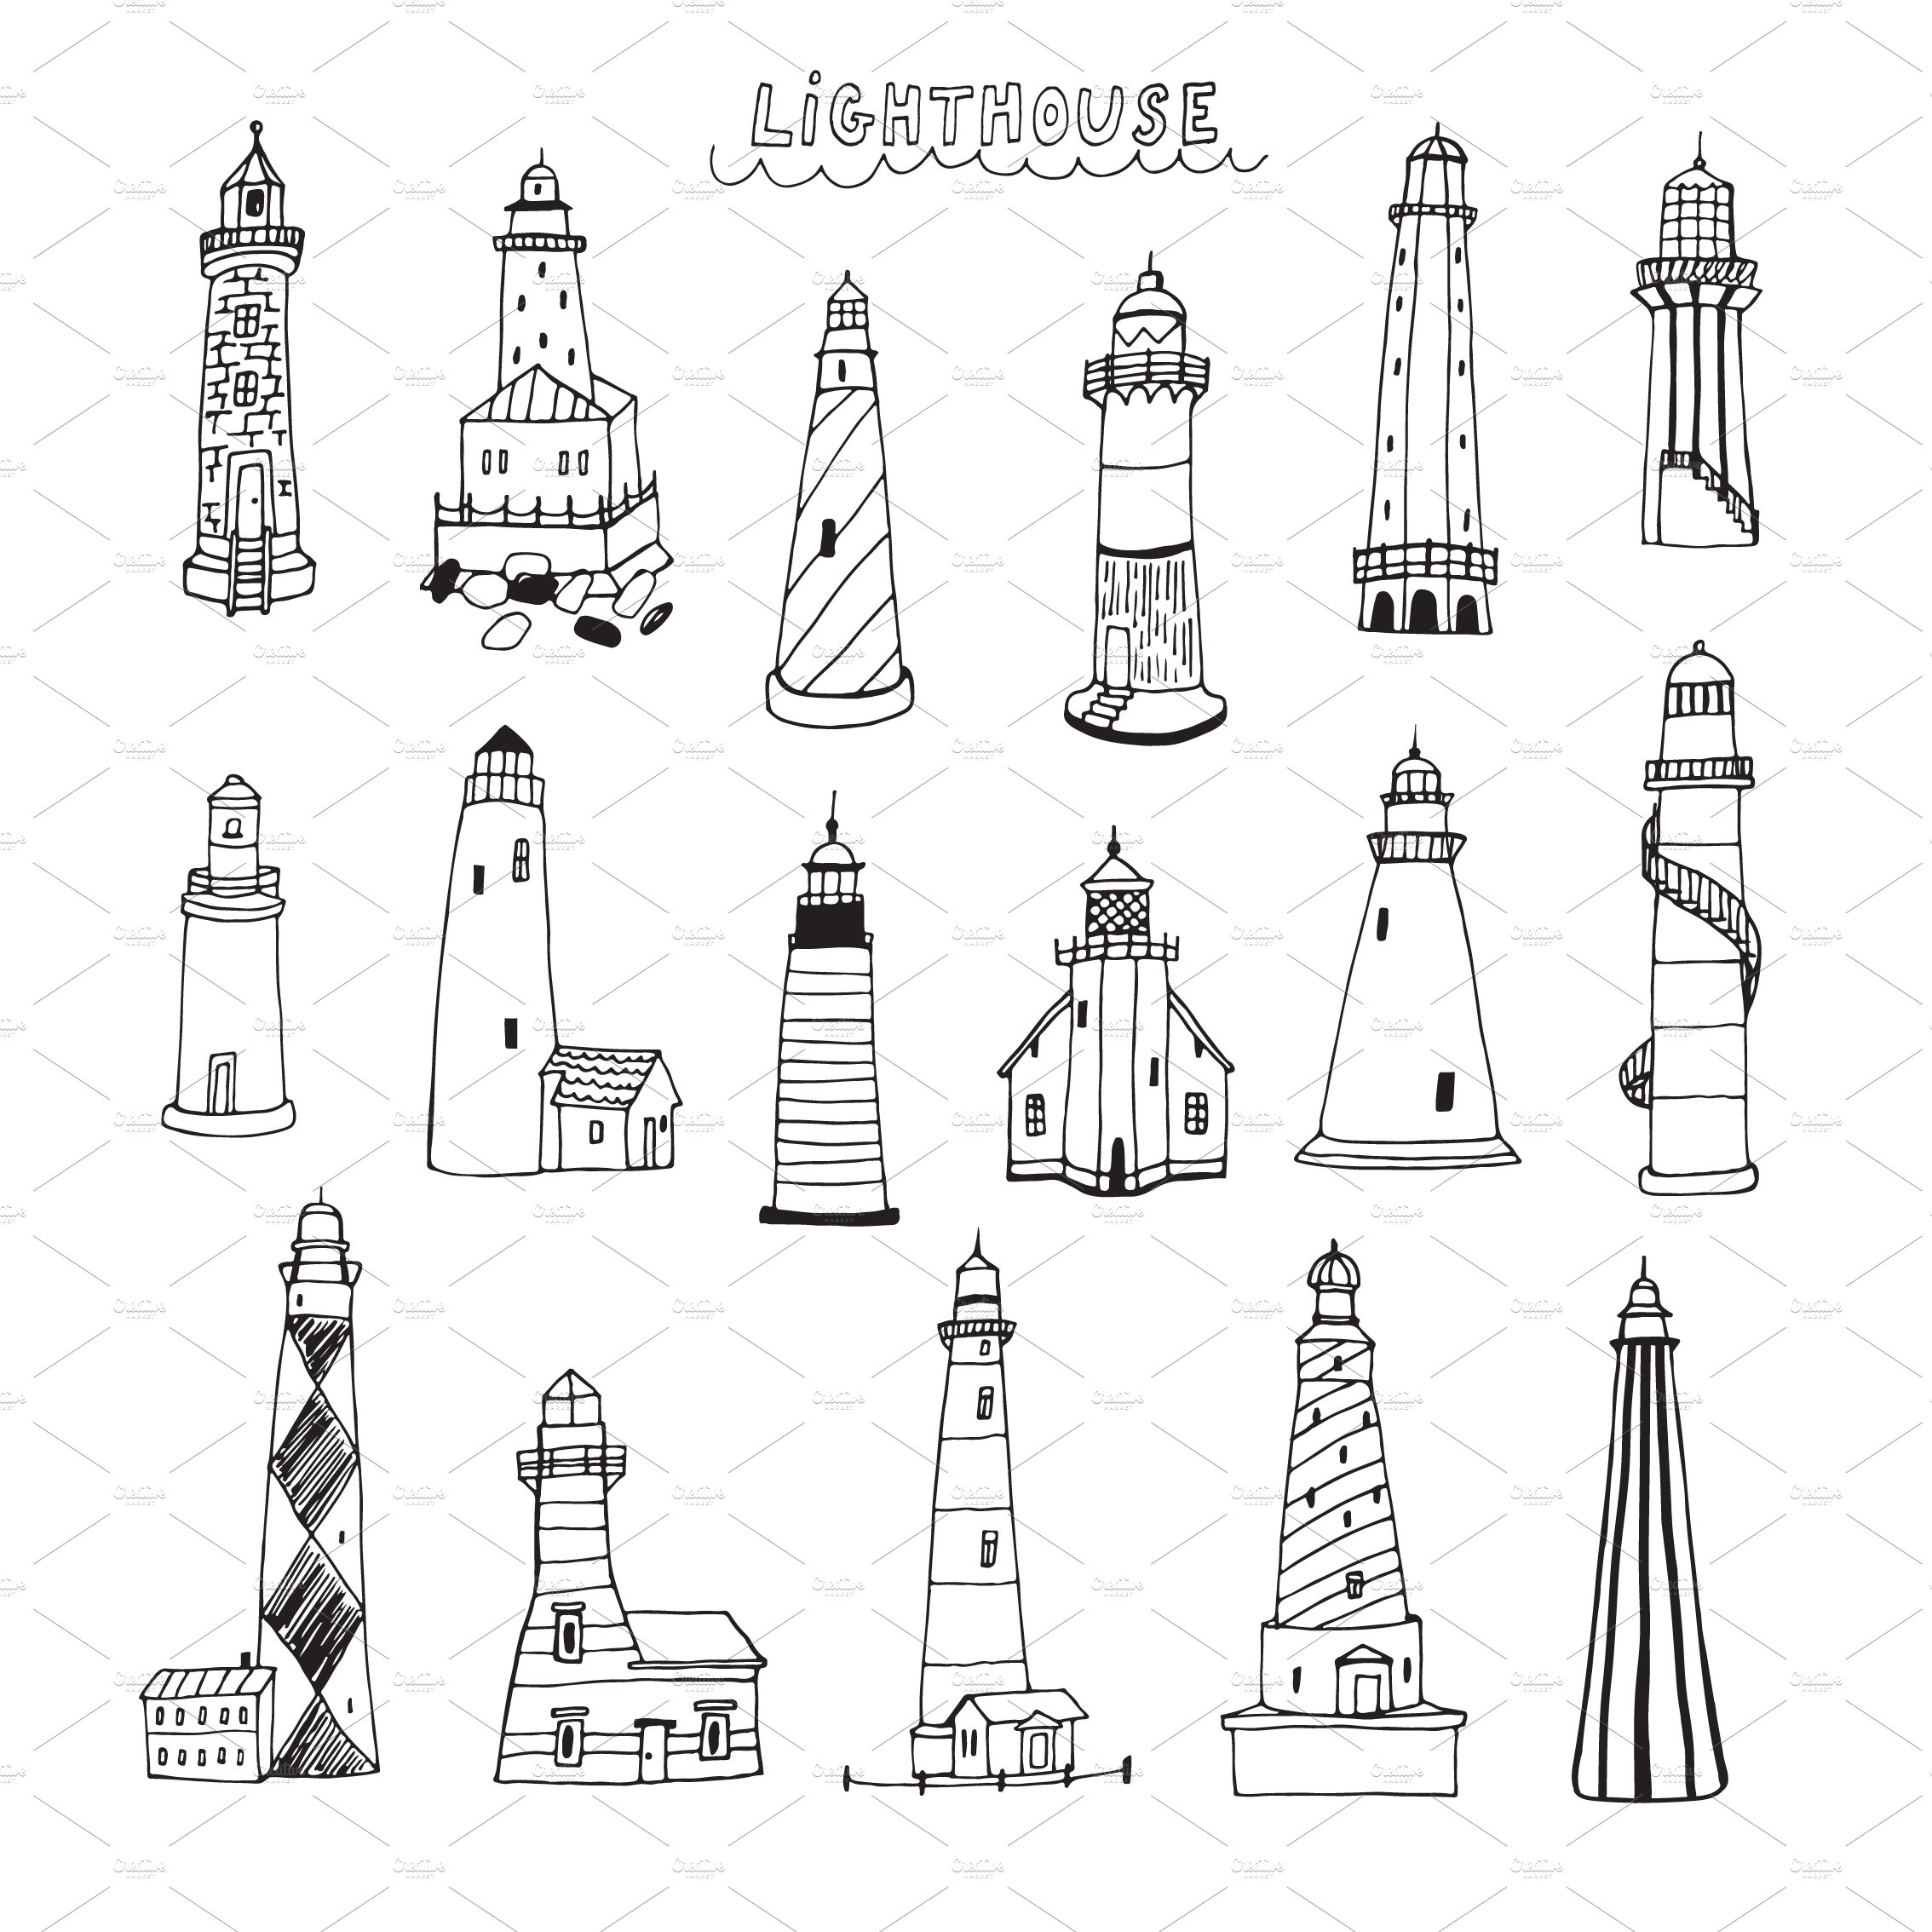 Lighthouse line art set.